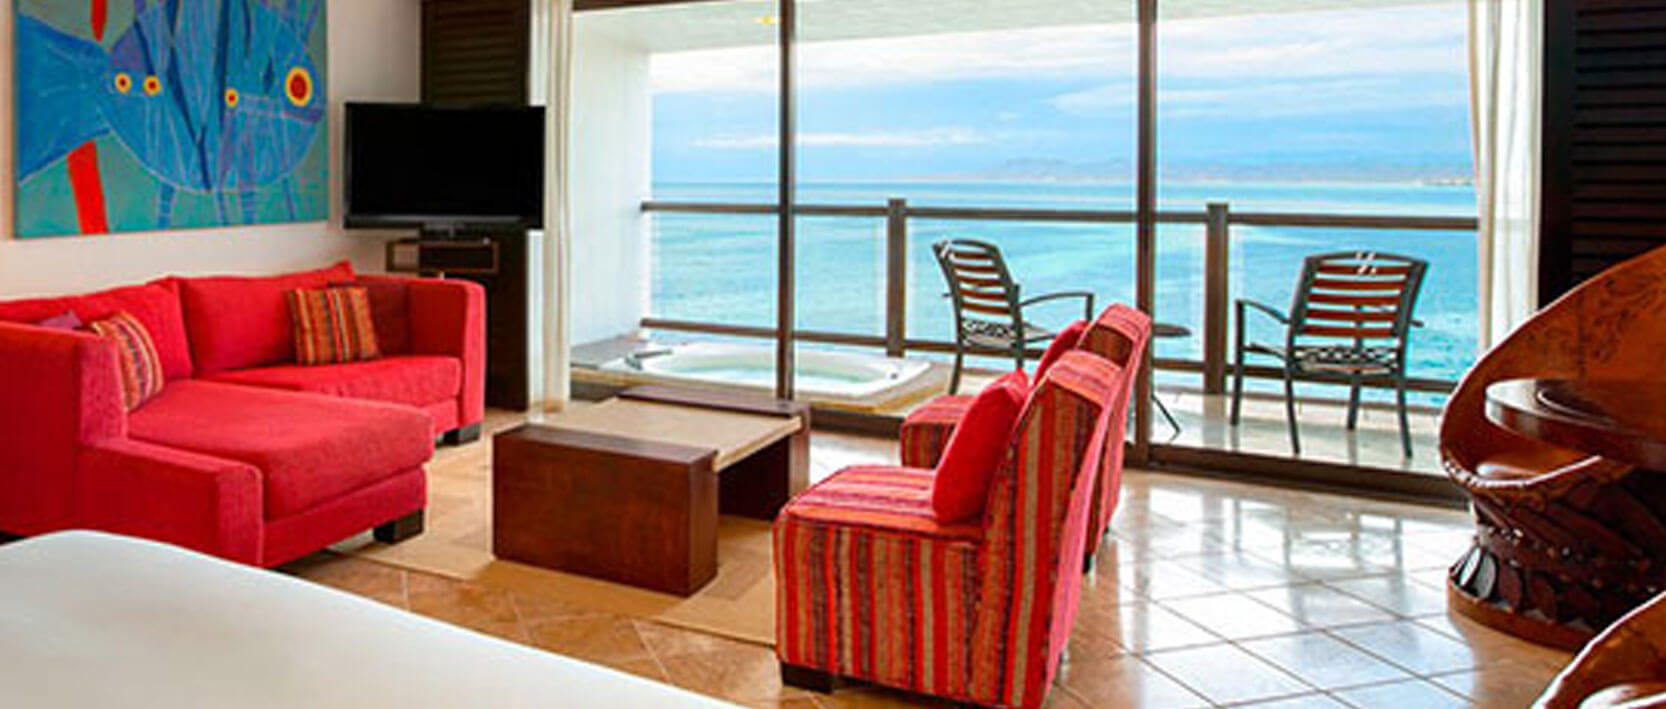 Hyatt Ziva Puerto Vallarta Accommodations - Club Oceanfront Hot Tub King or Double